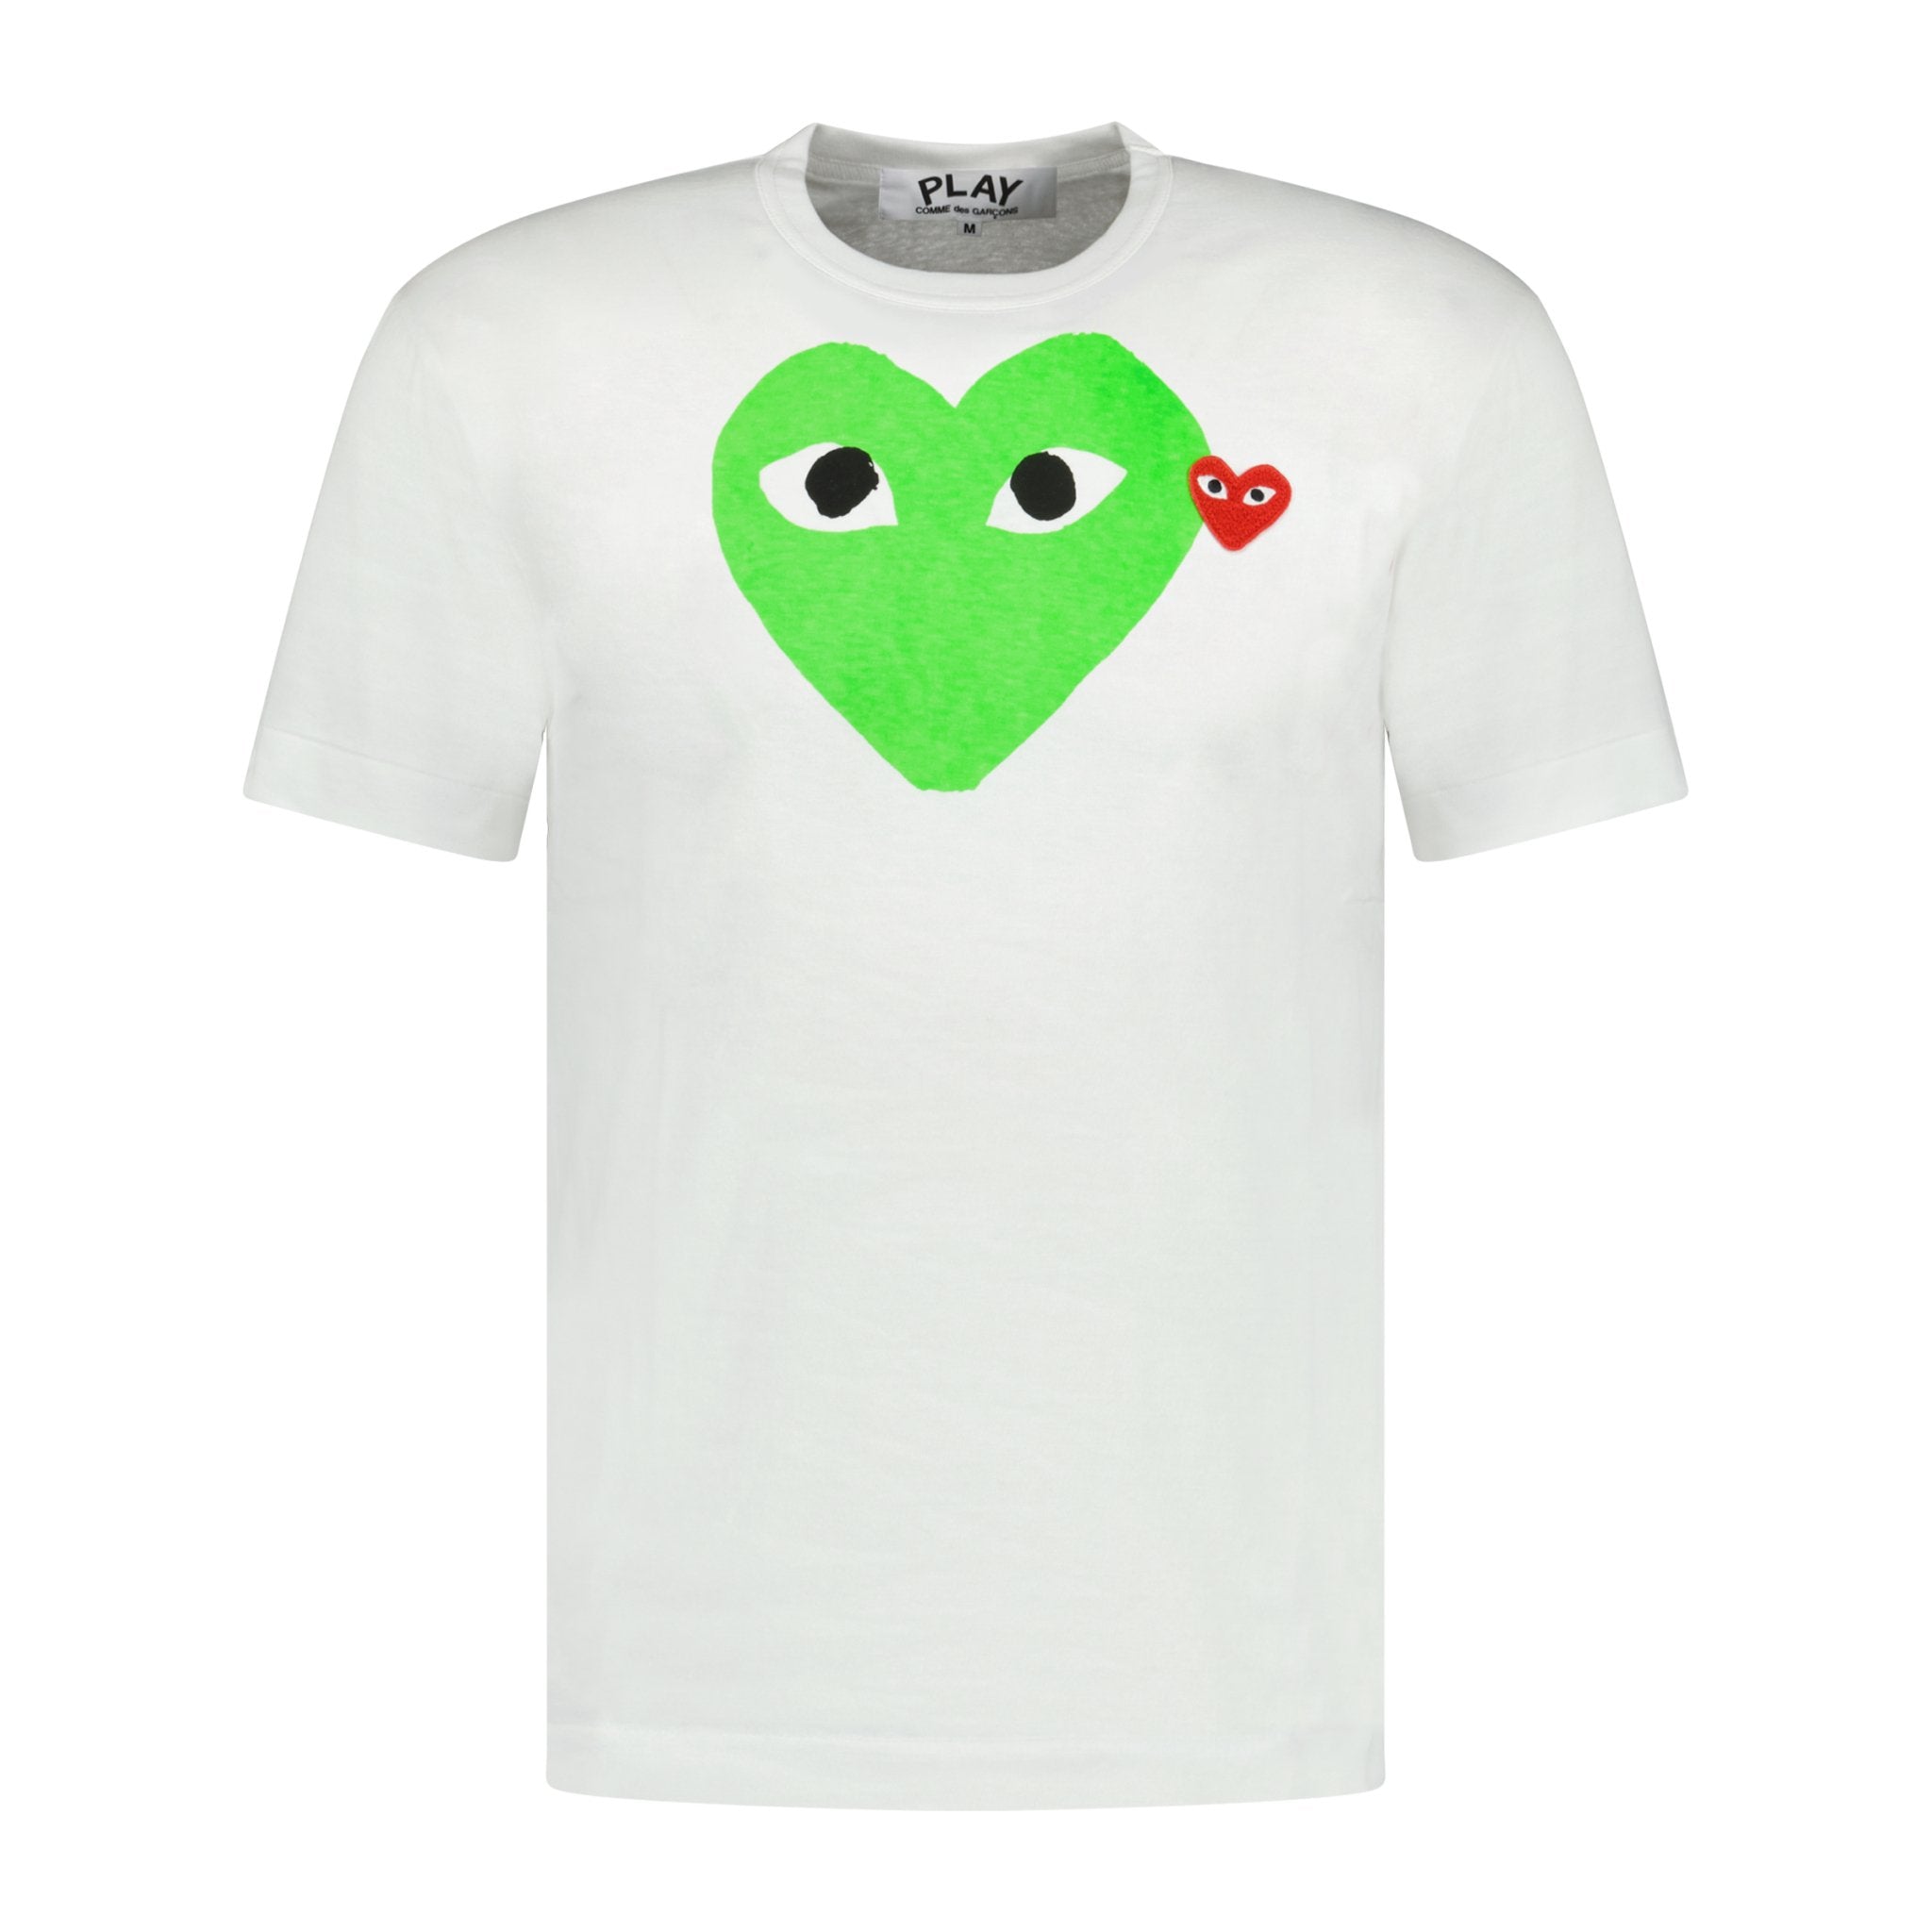 Comme Des Garcons Big Print Green Heart T-Shirt White